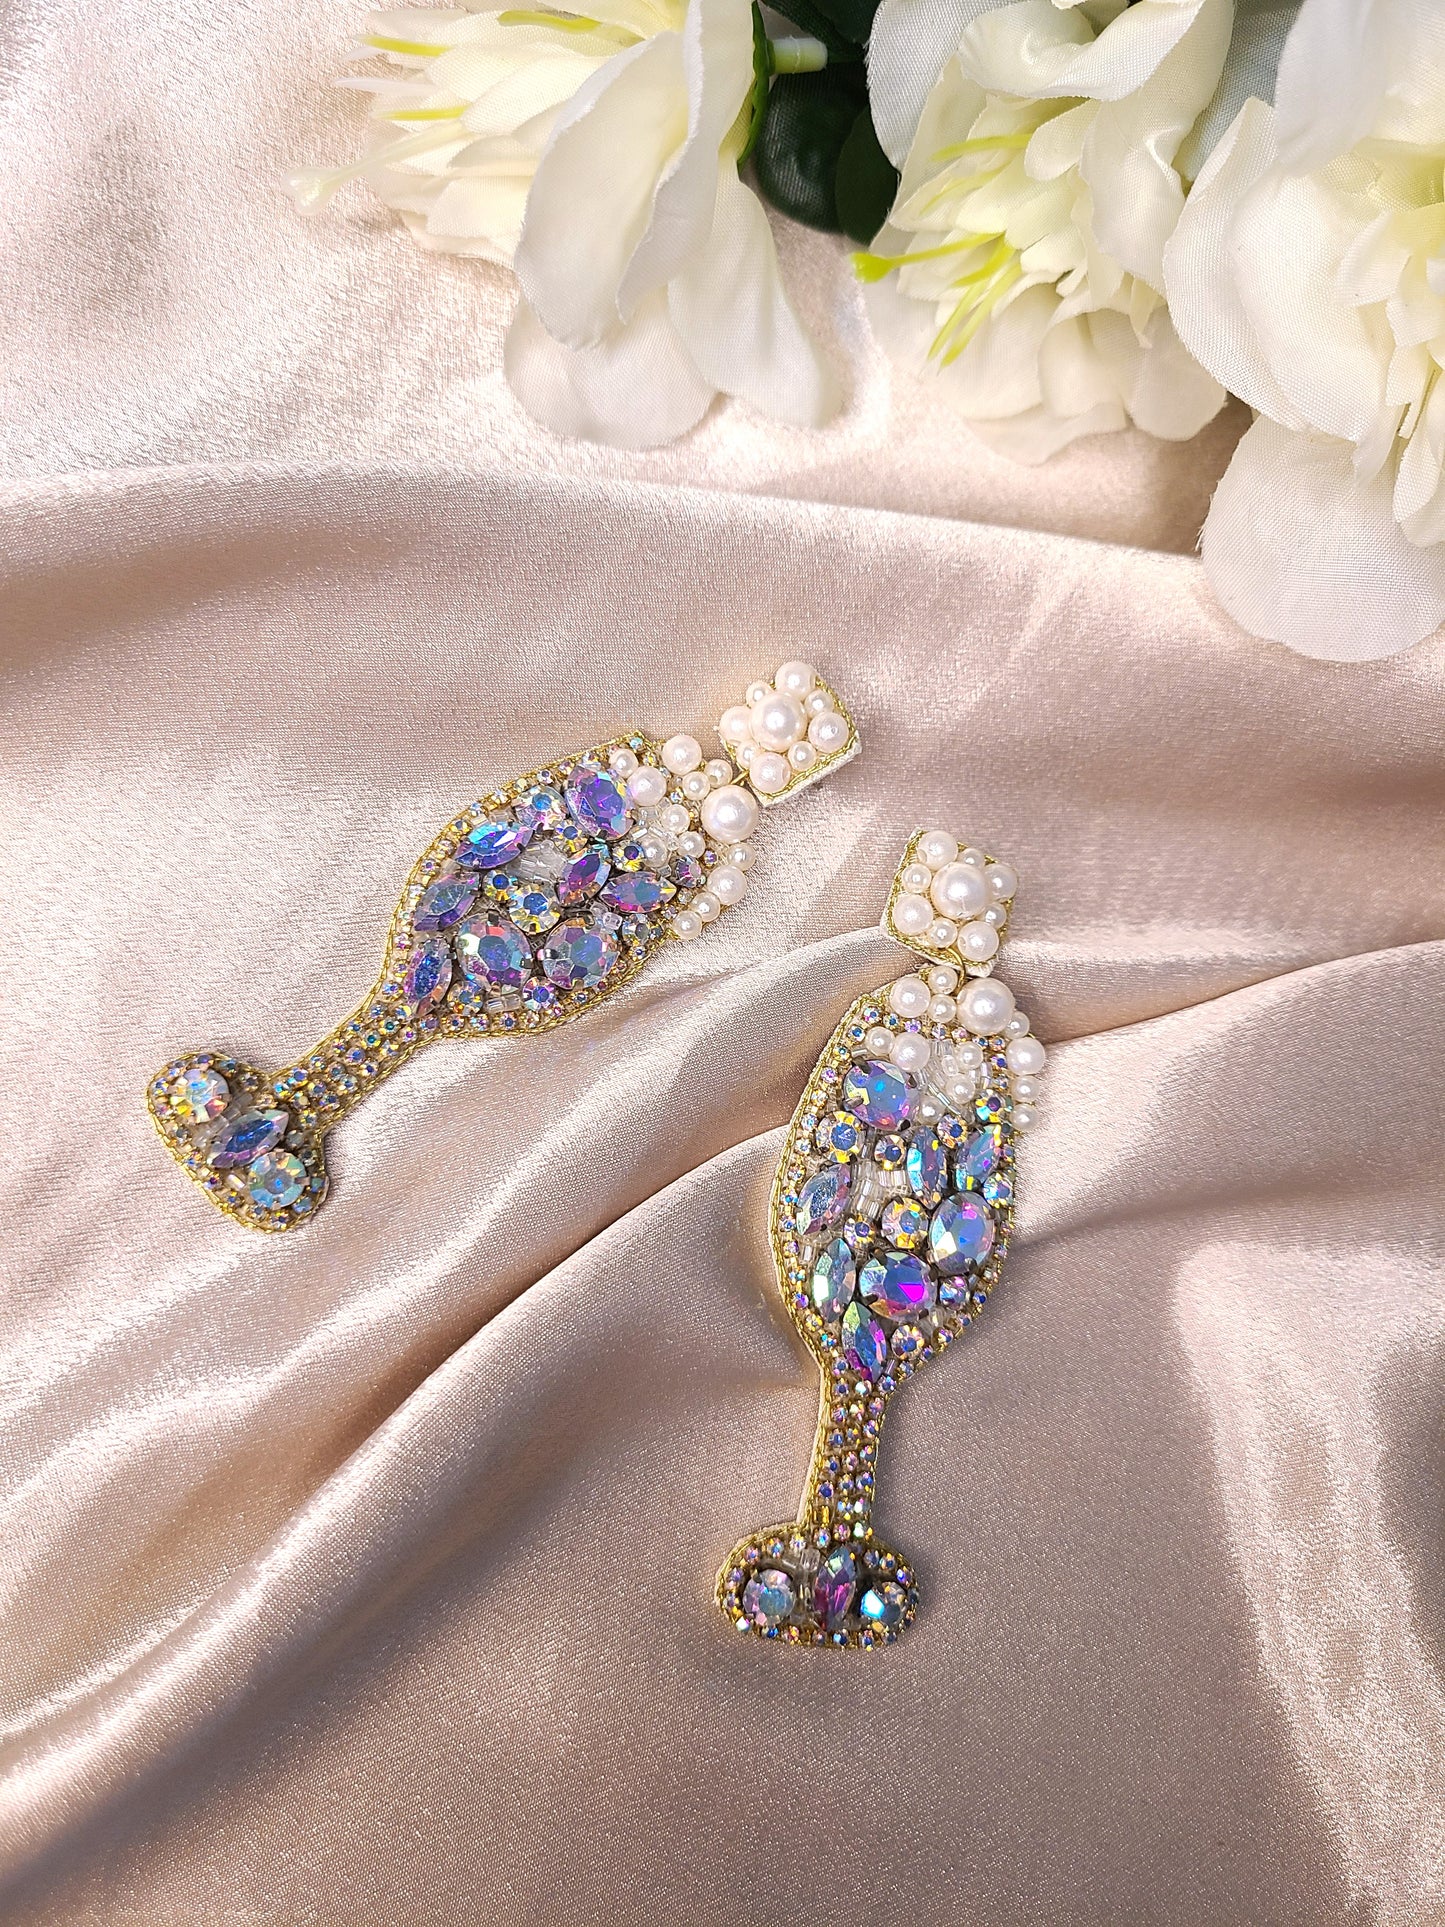 Champagne Glass earrings